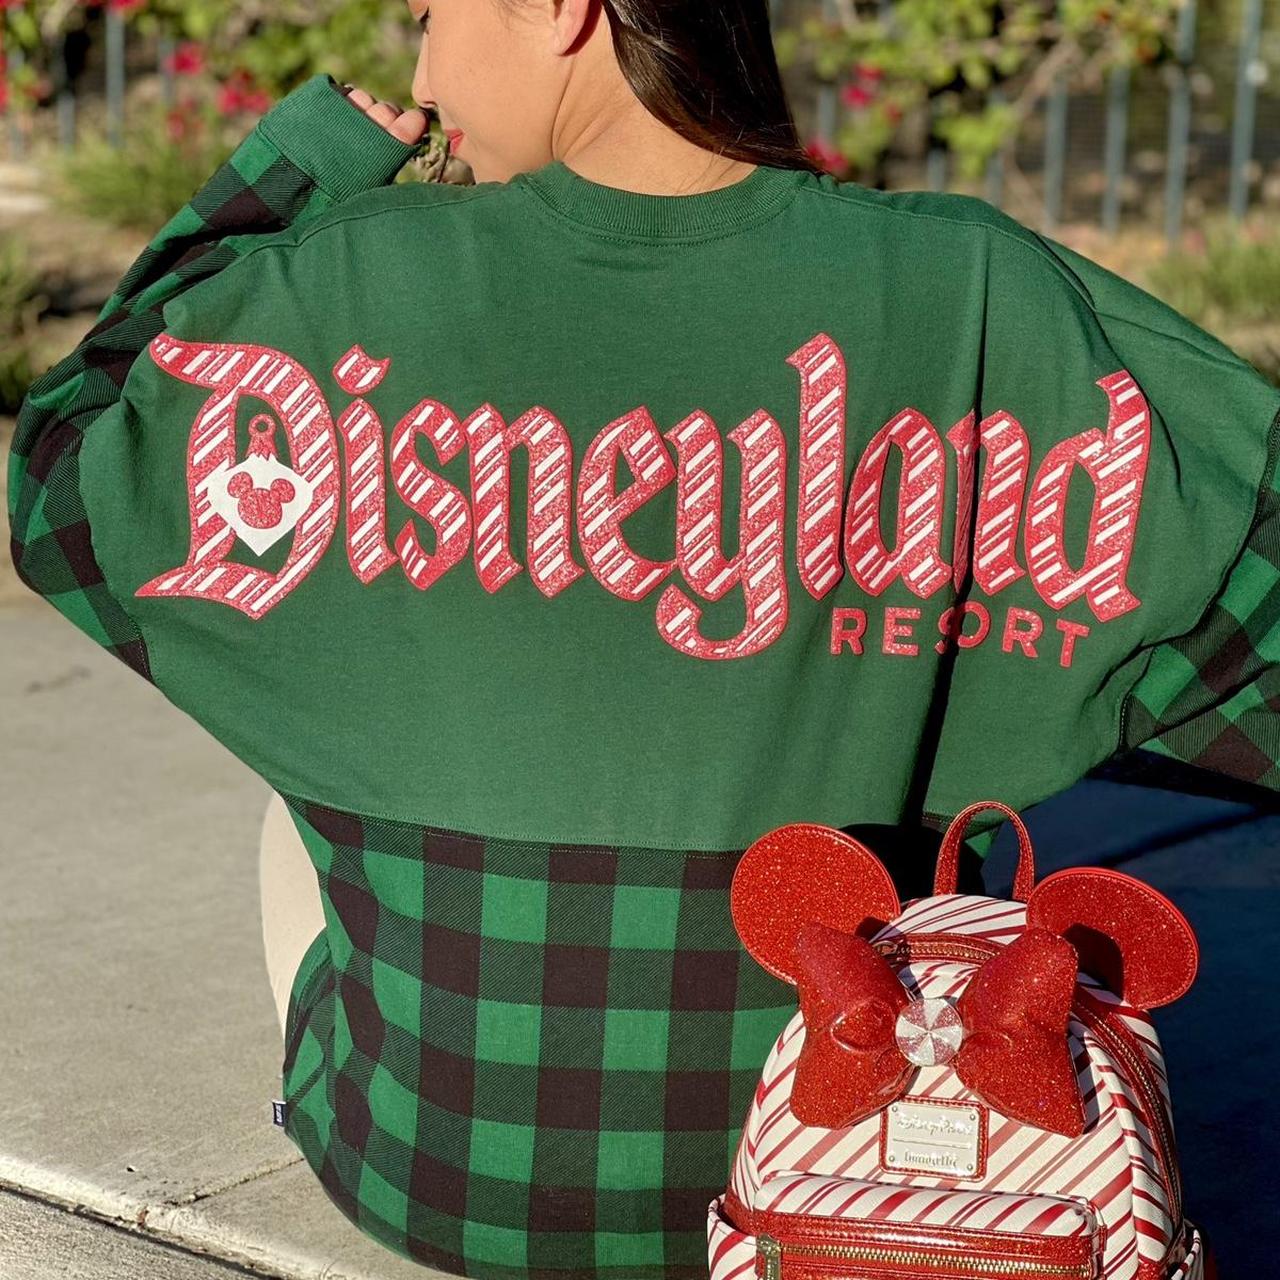 Used 2020 Disneyland Resort Christmas Spirit Jersey. - Depop